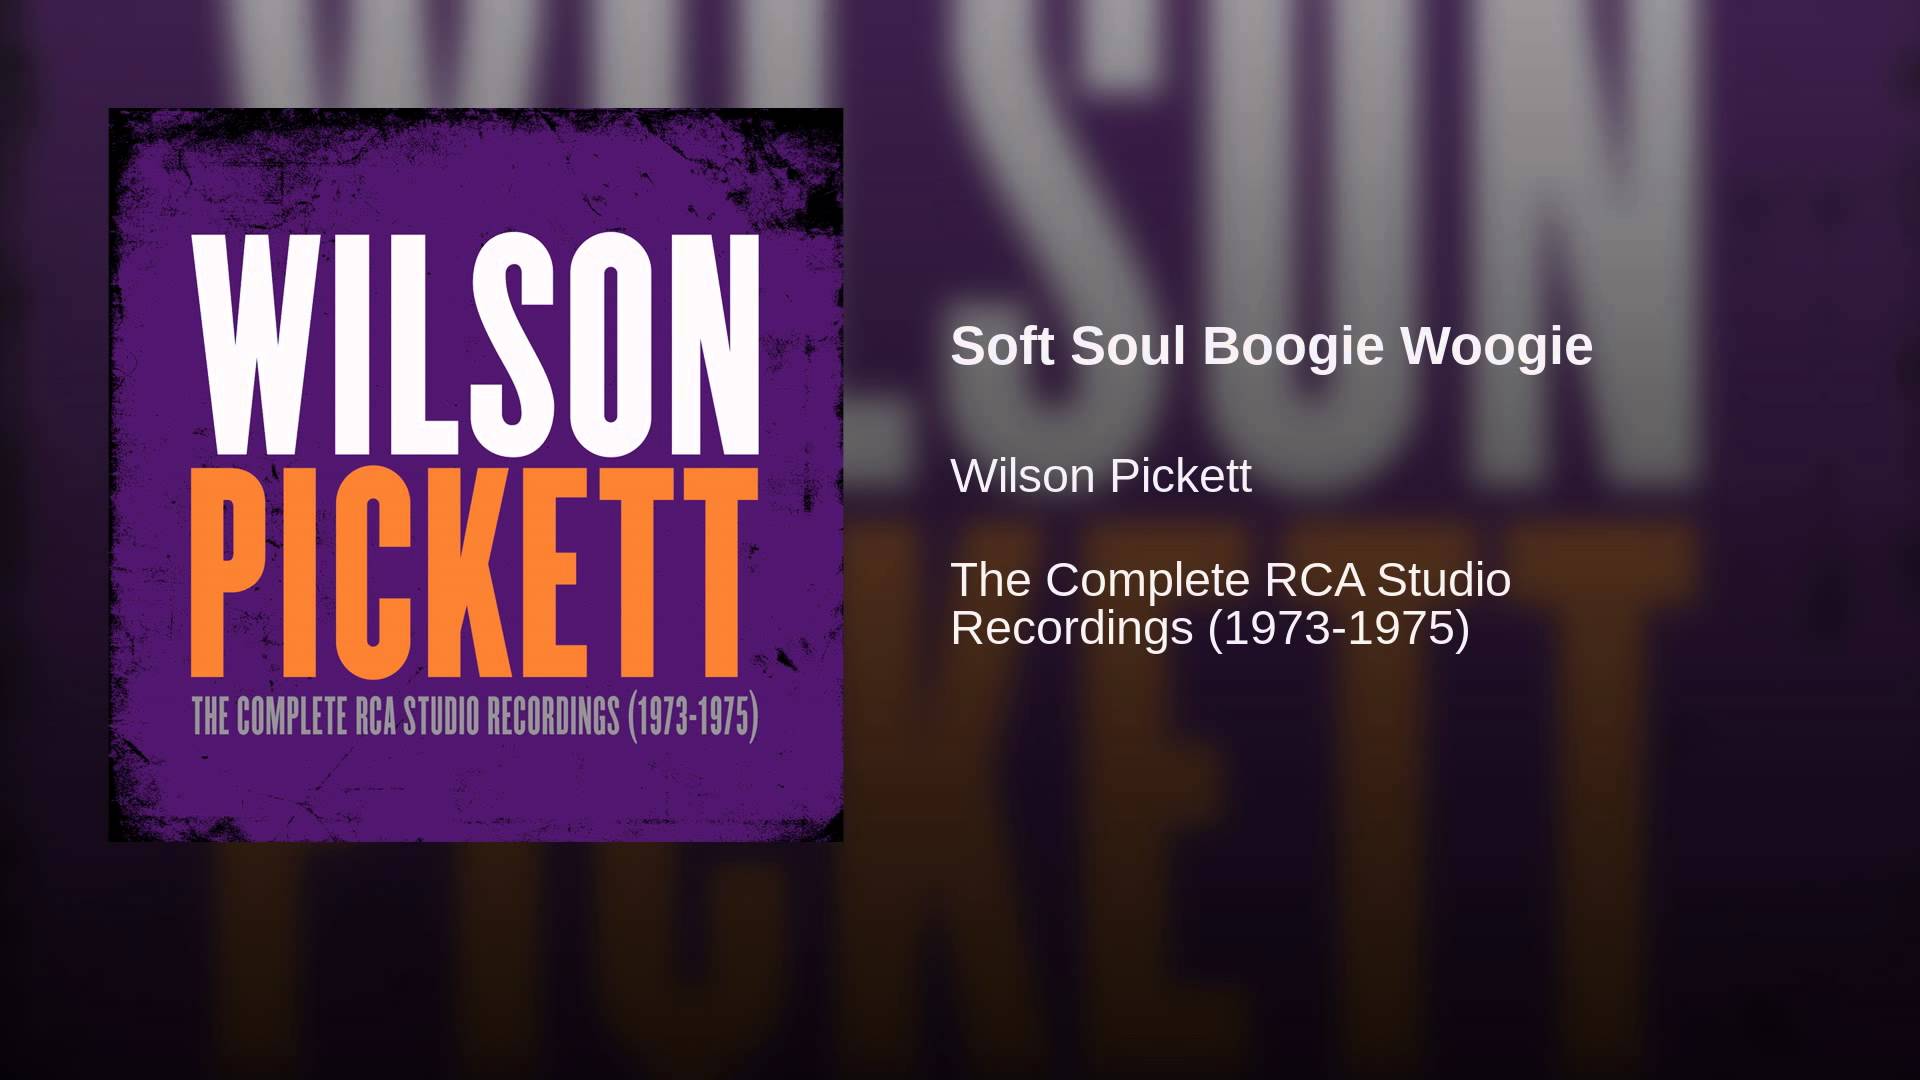 Soft Soul Boogie Woogie - YouTube